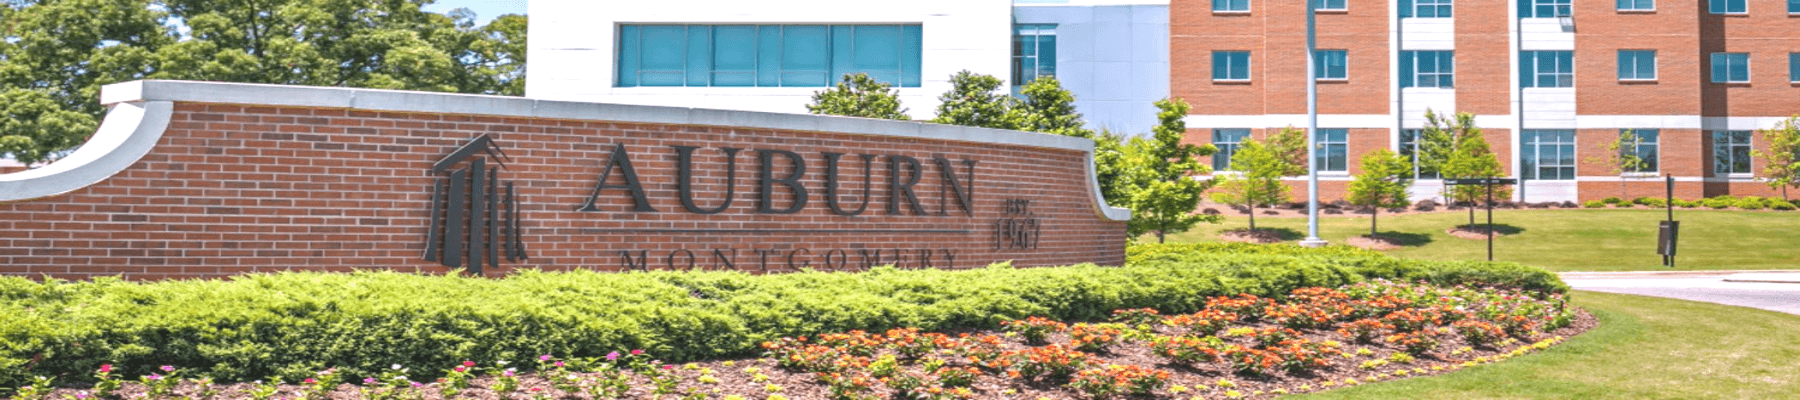 Auburn University - Montgomery